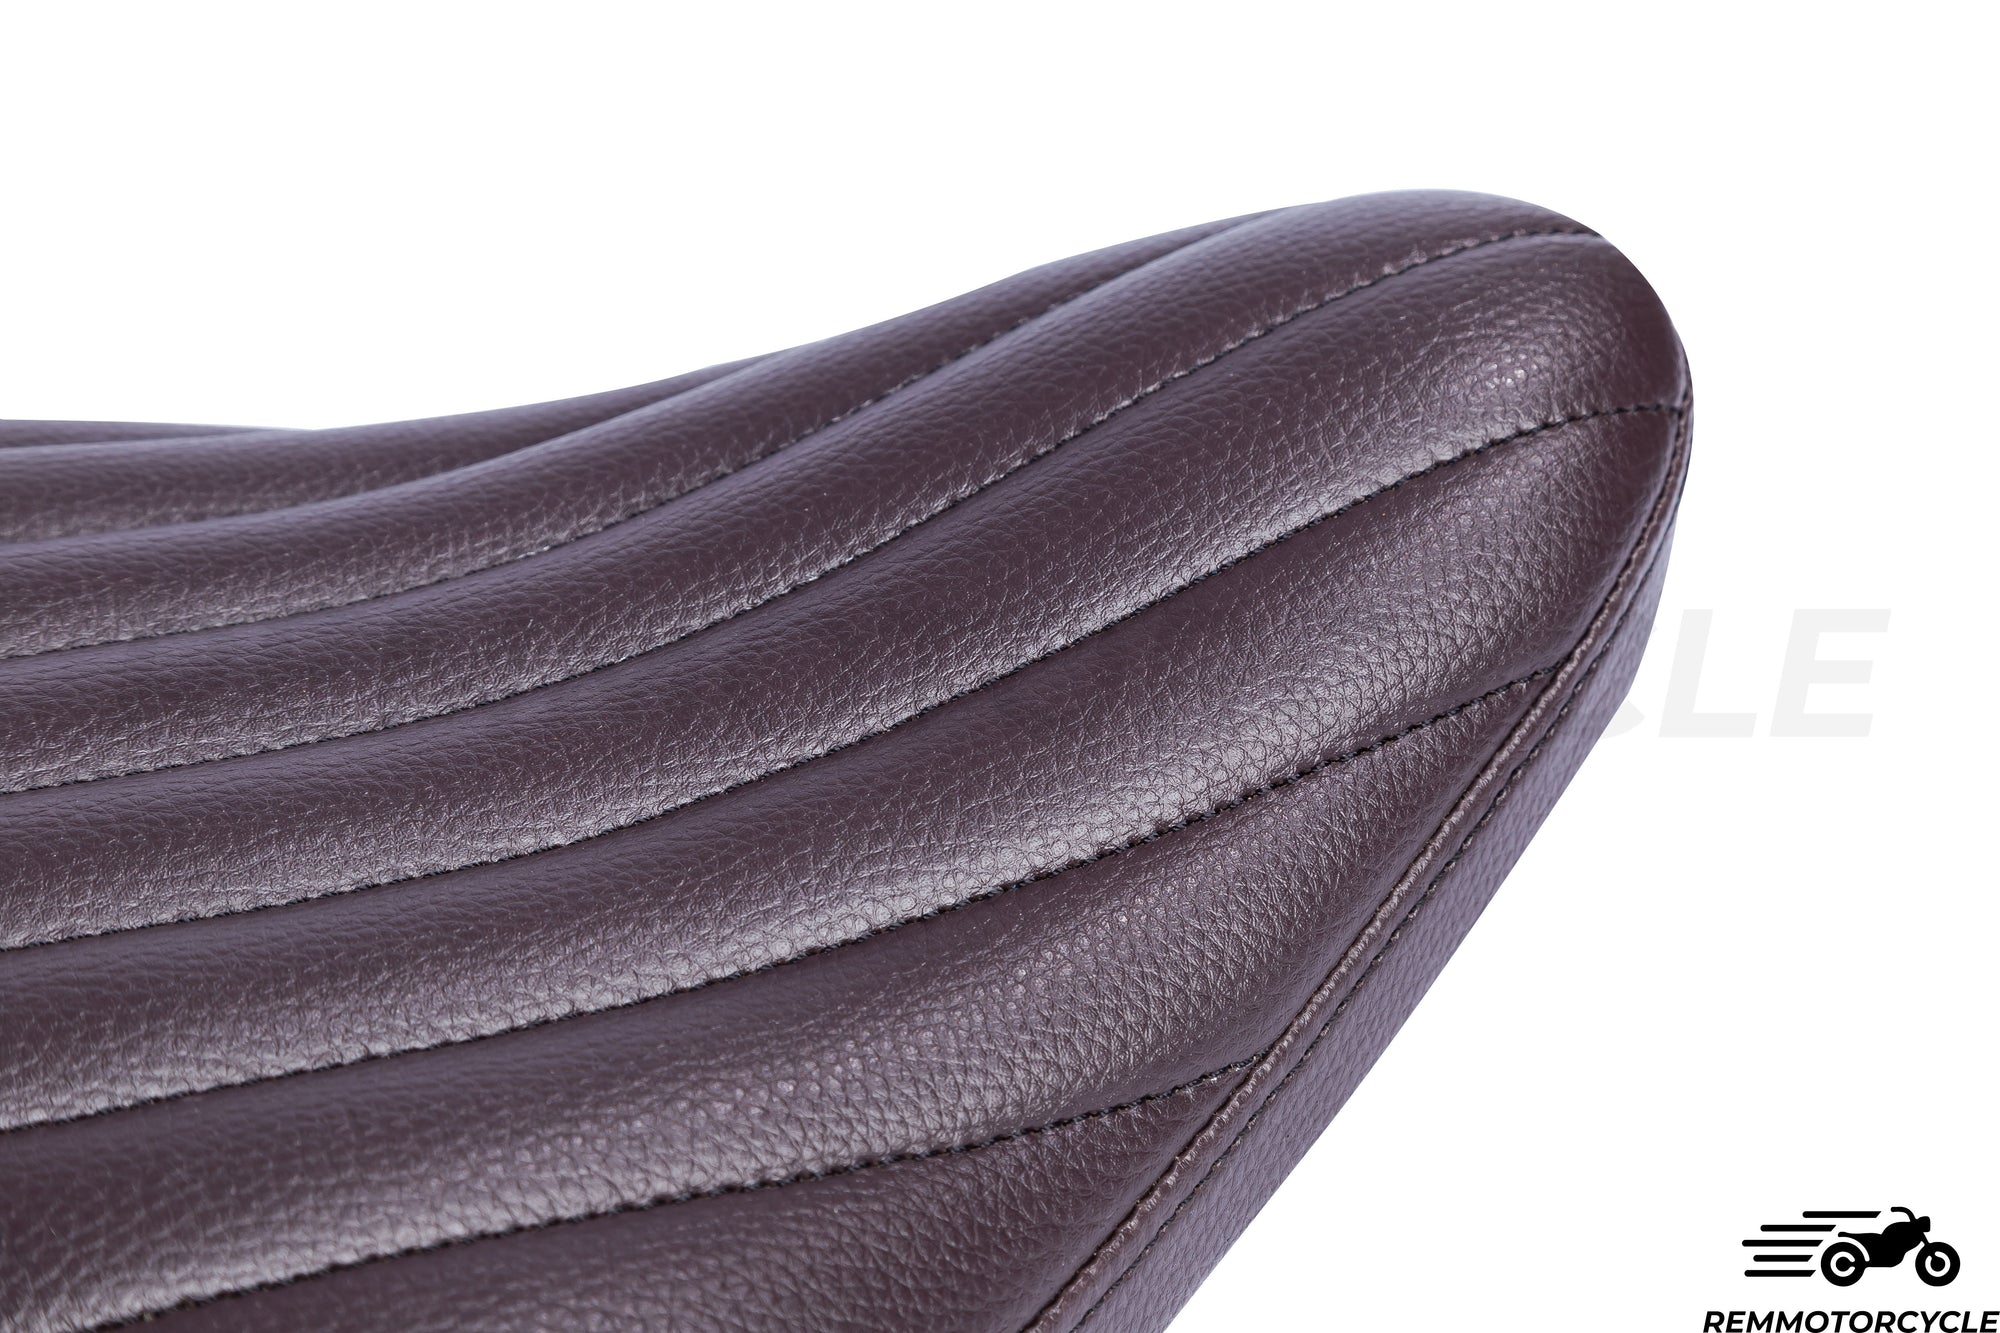 Bobber brown saddle - vertical seams